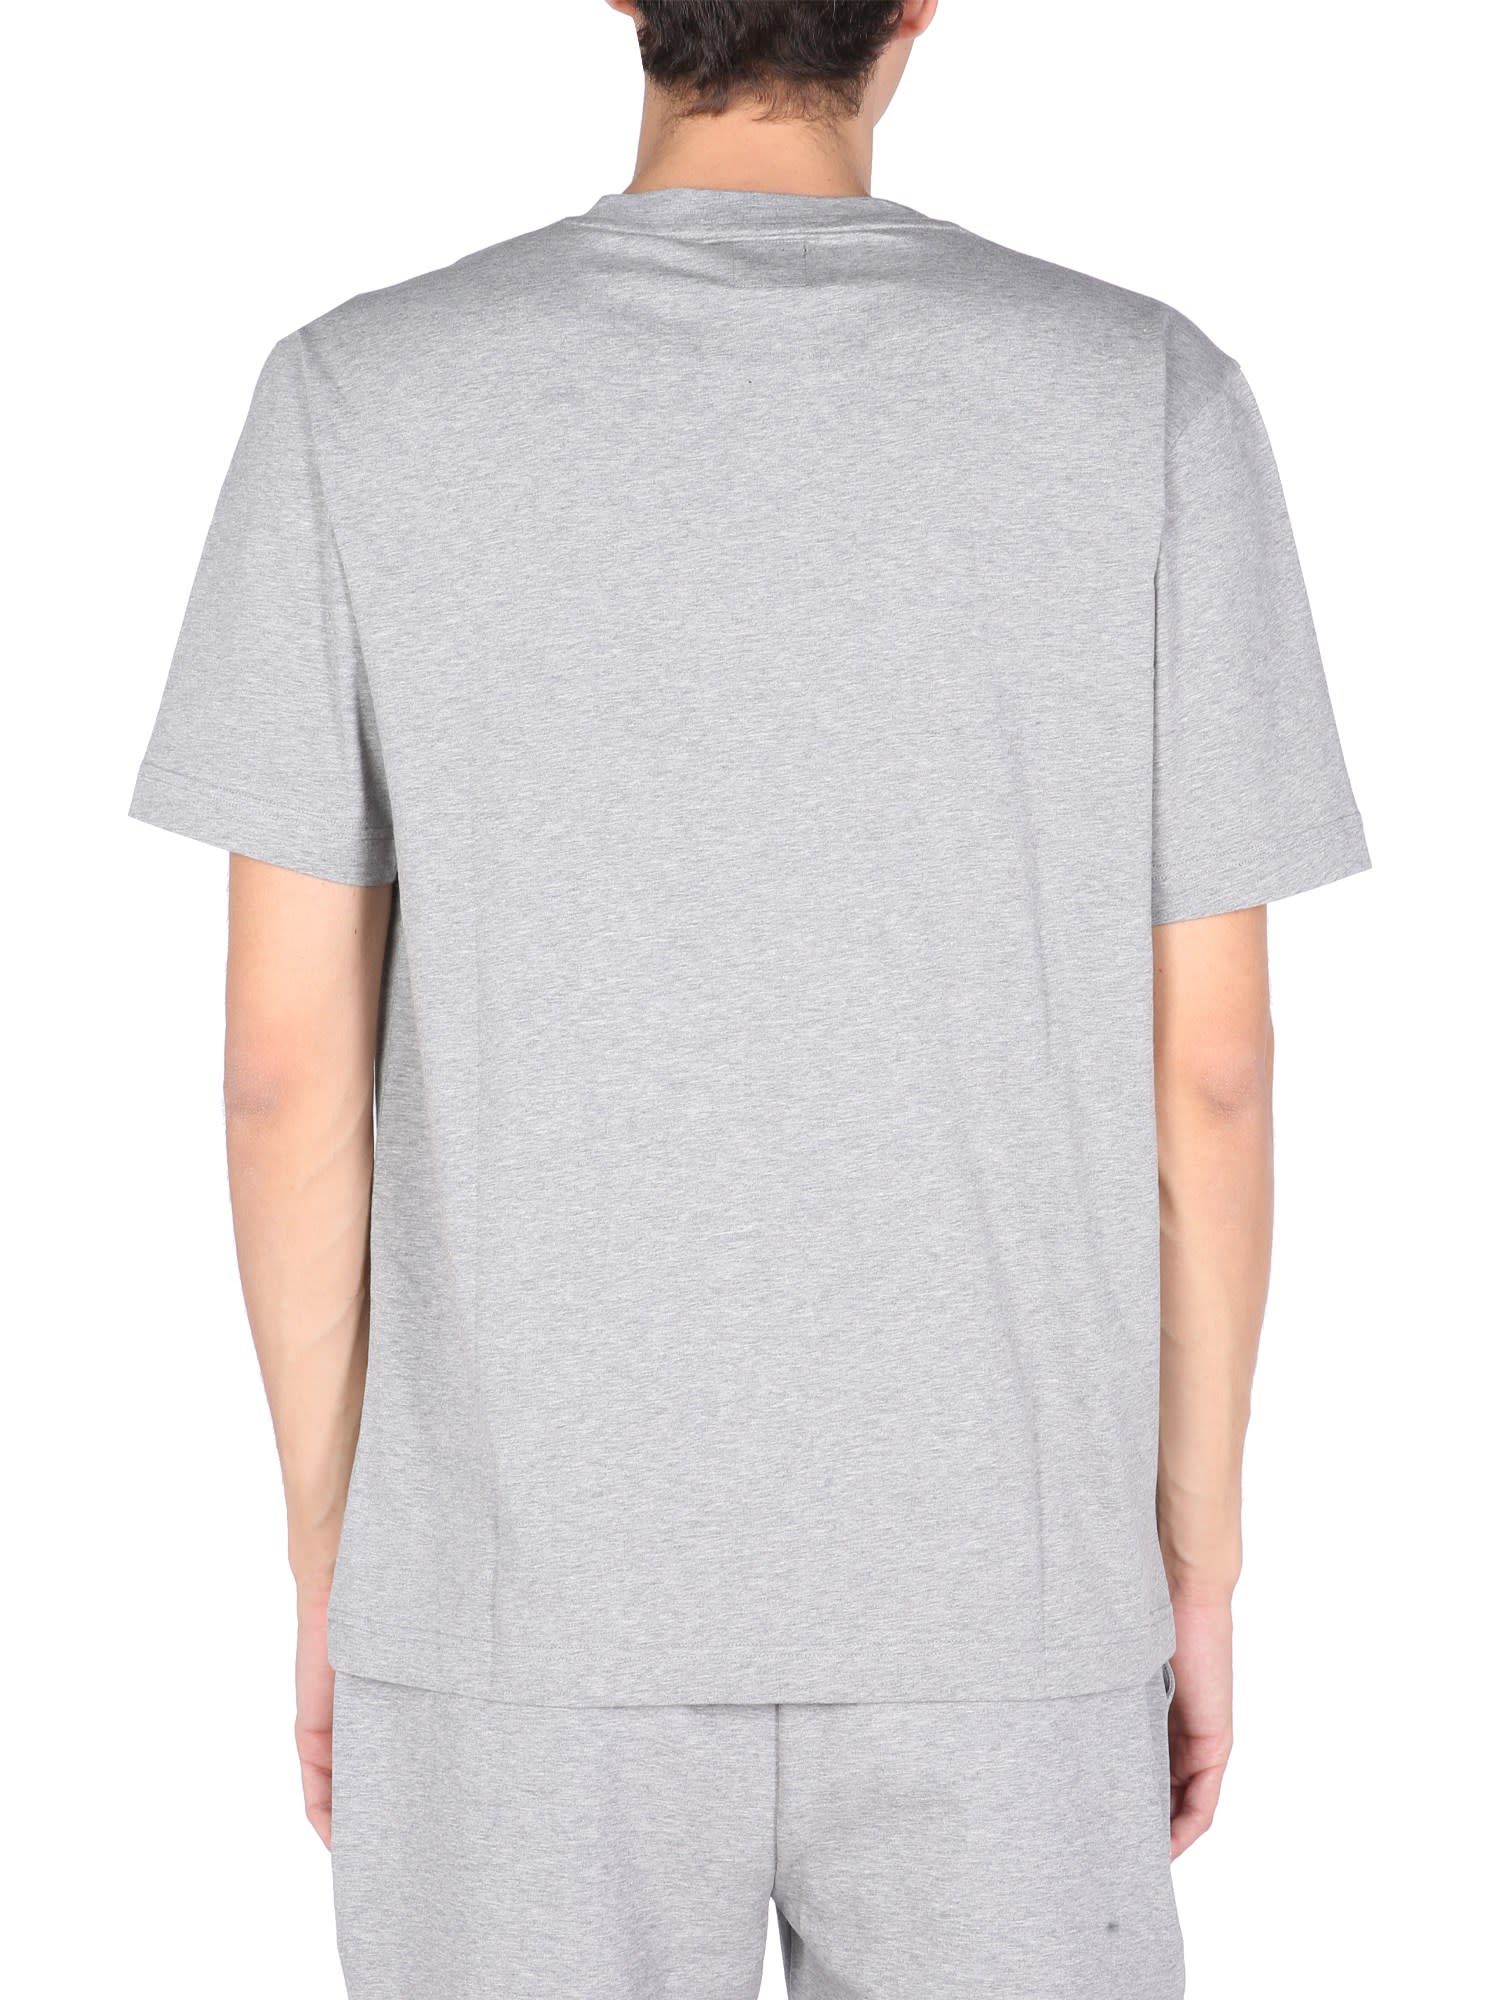 NBA Men's T-Shirt - Grey - XL